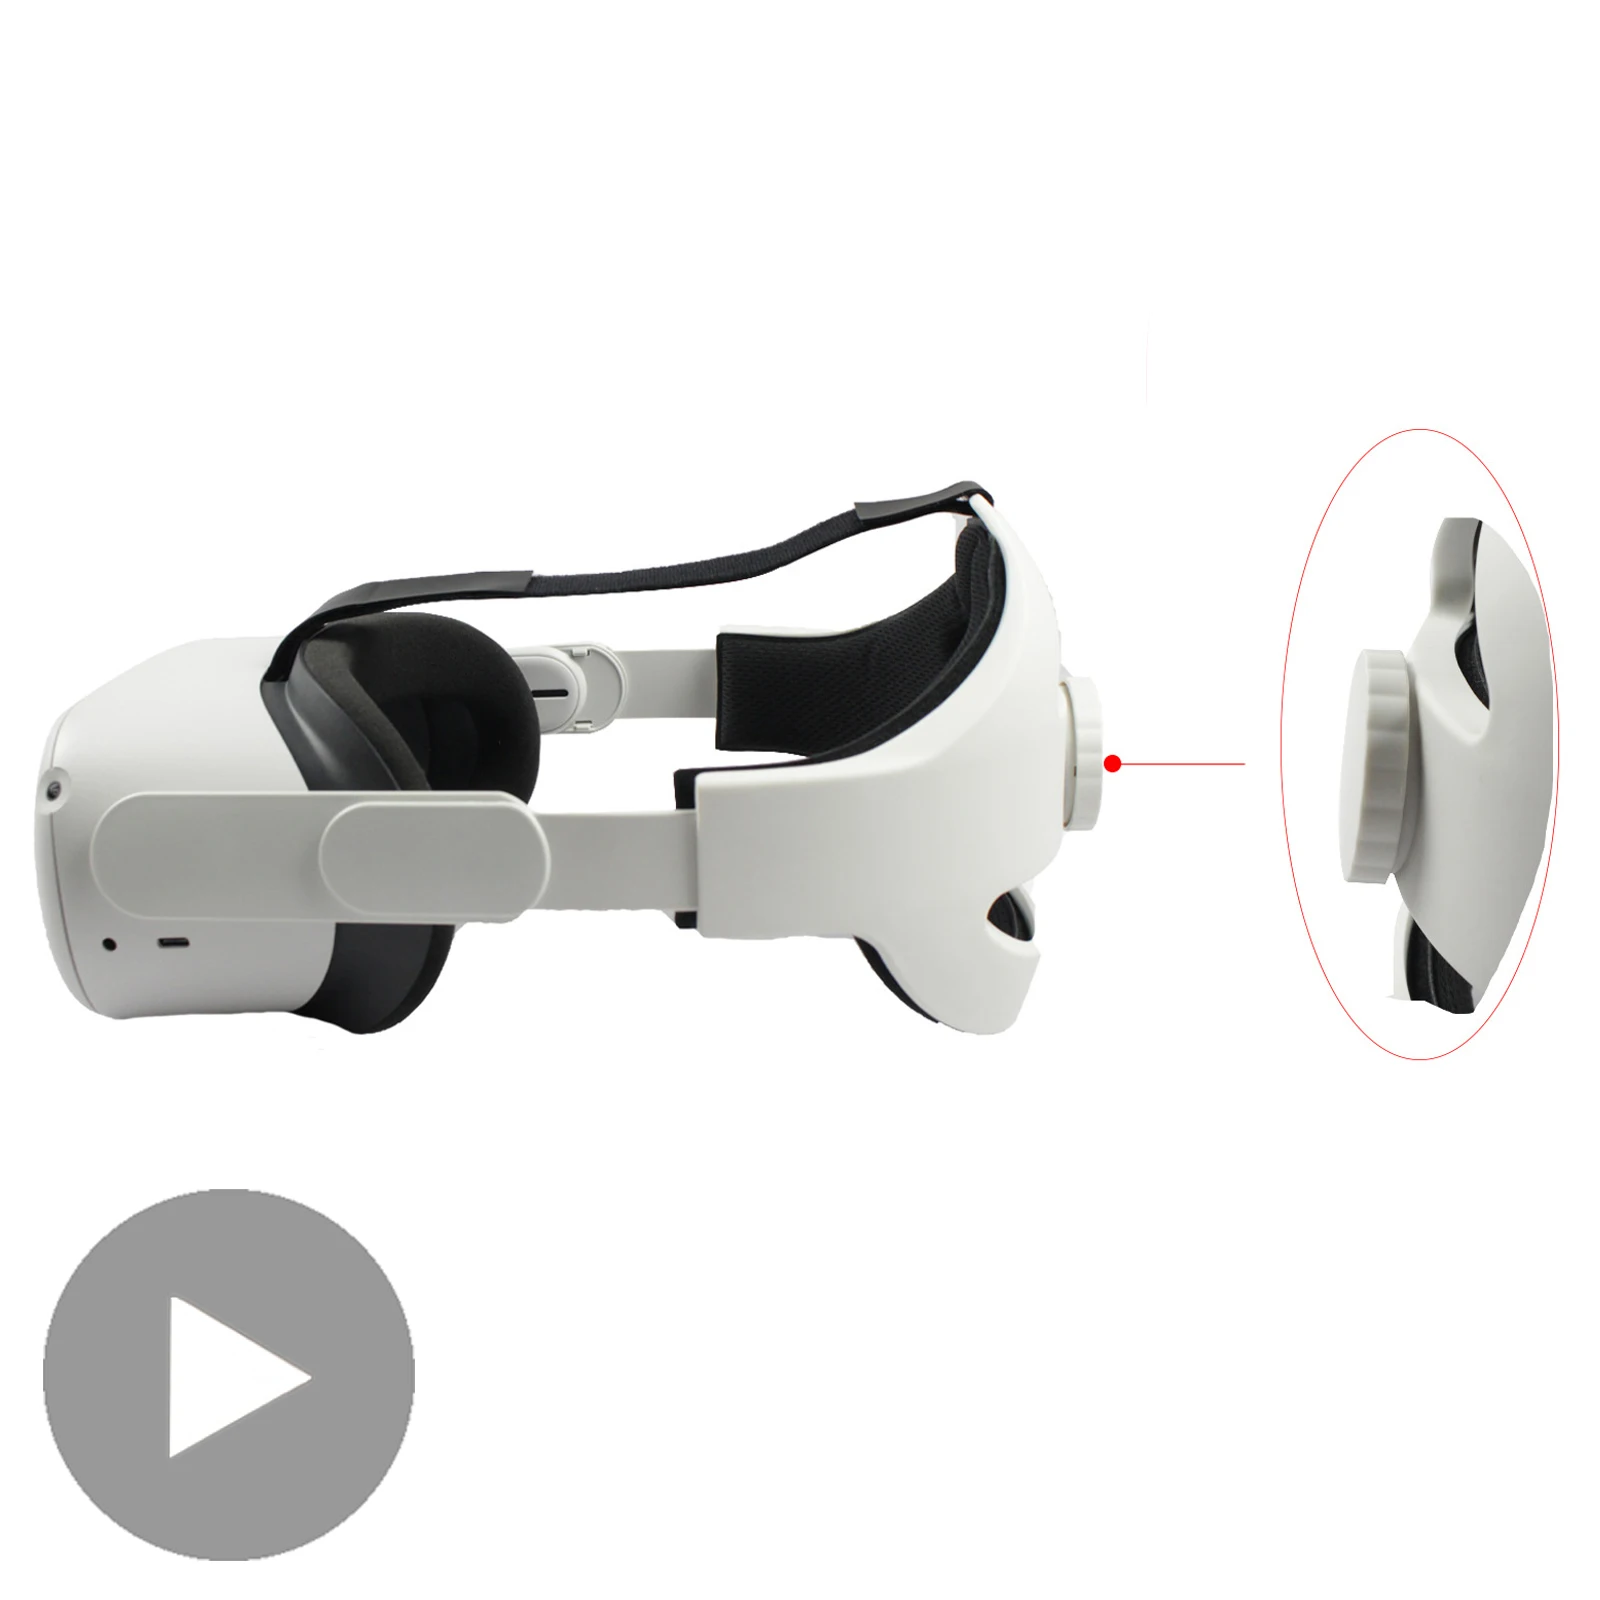 Gafas virtuales Oculus Rift. - Two Reality